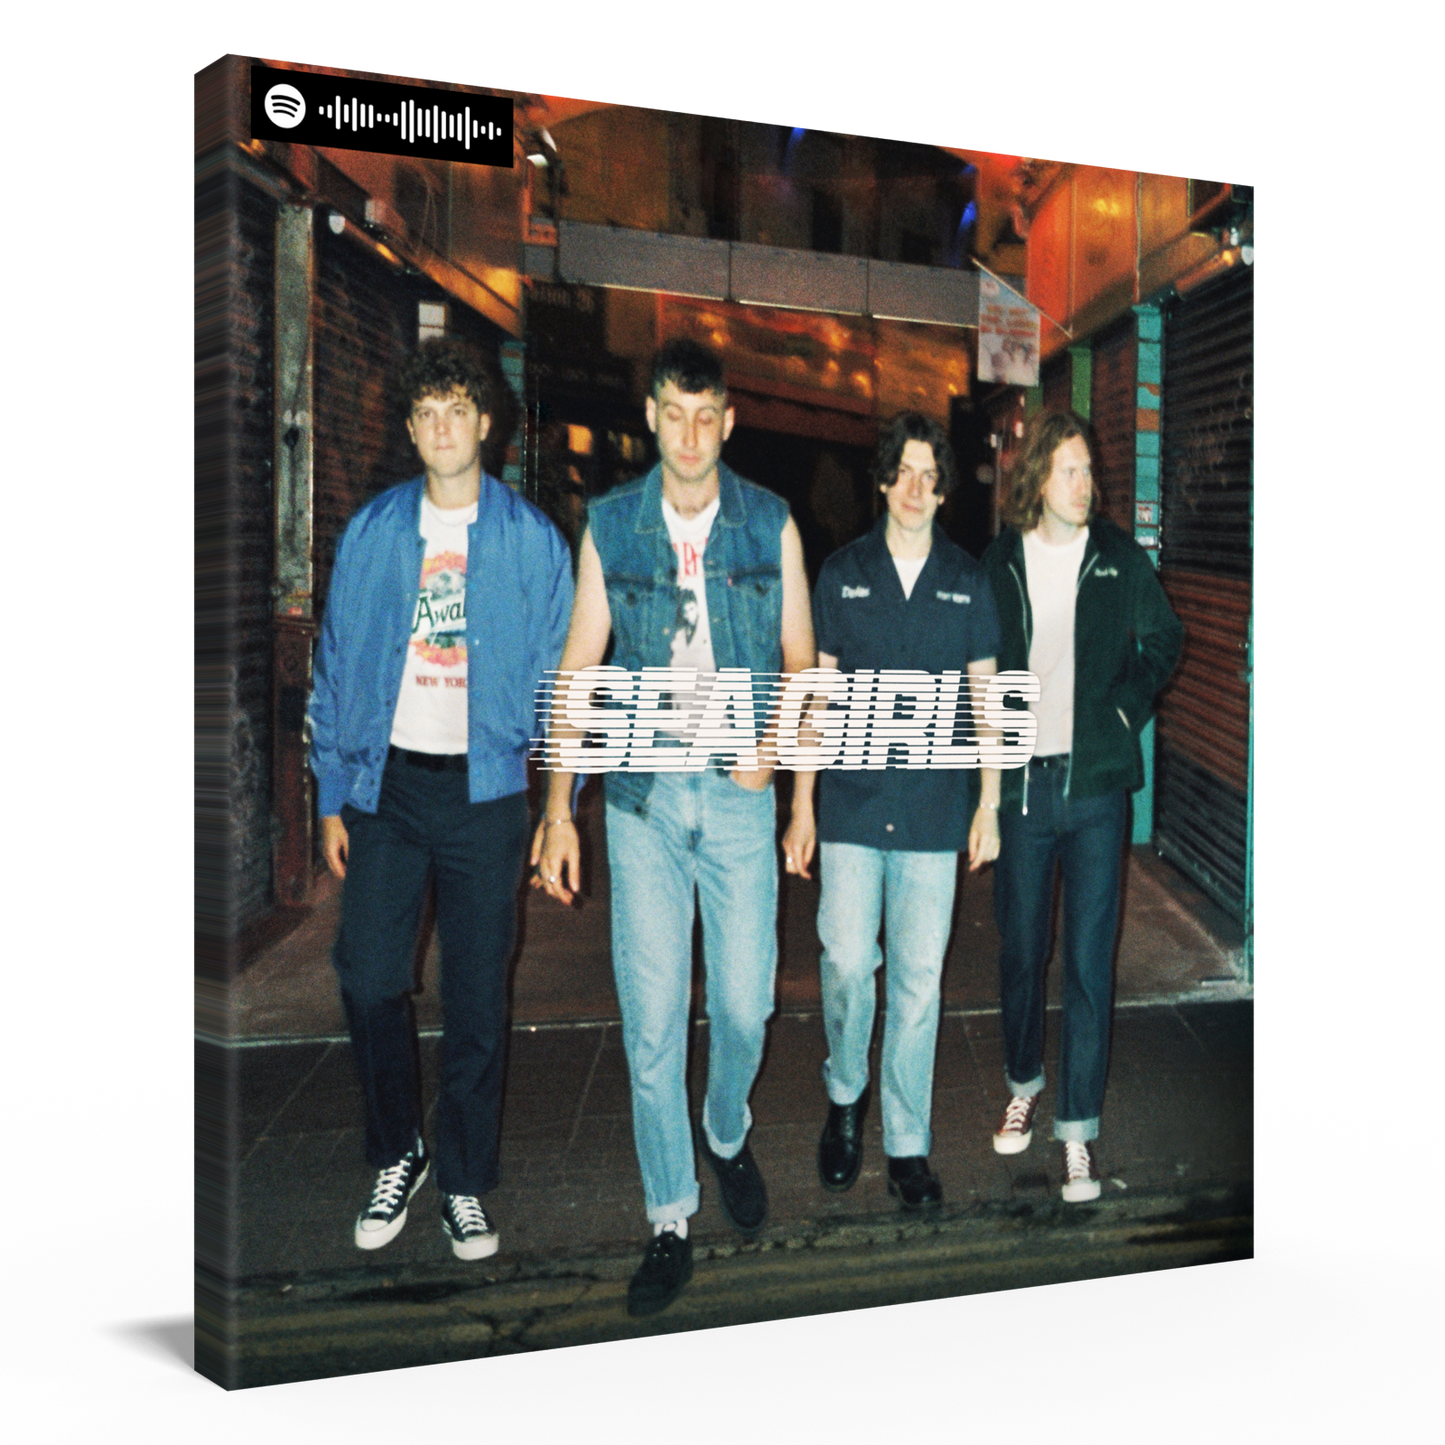 Sea Girls - Homesick Deluxe Album